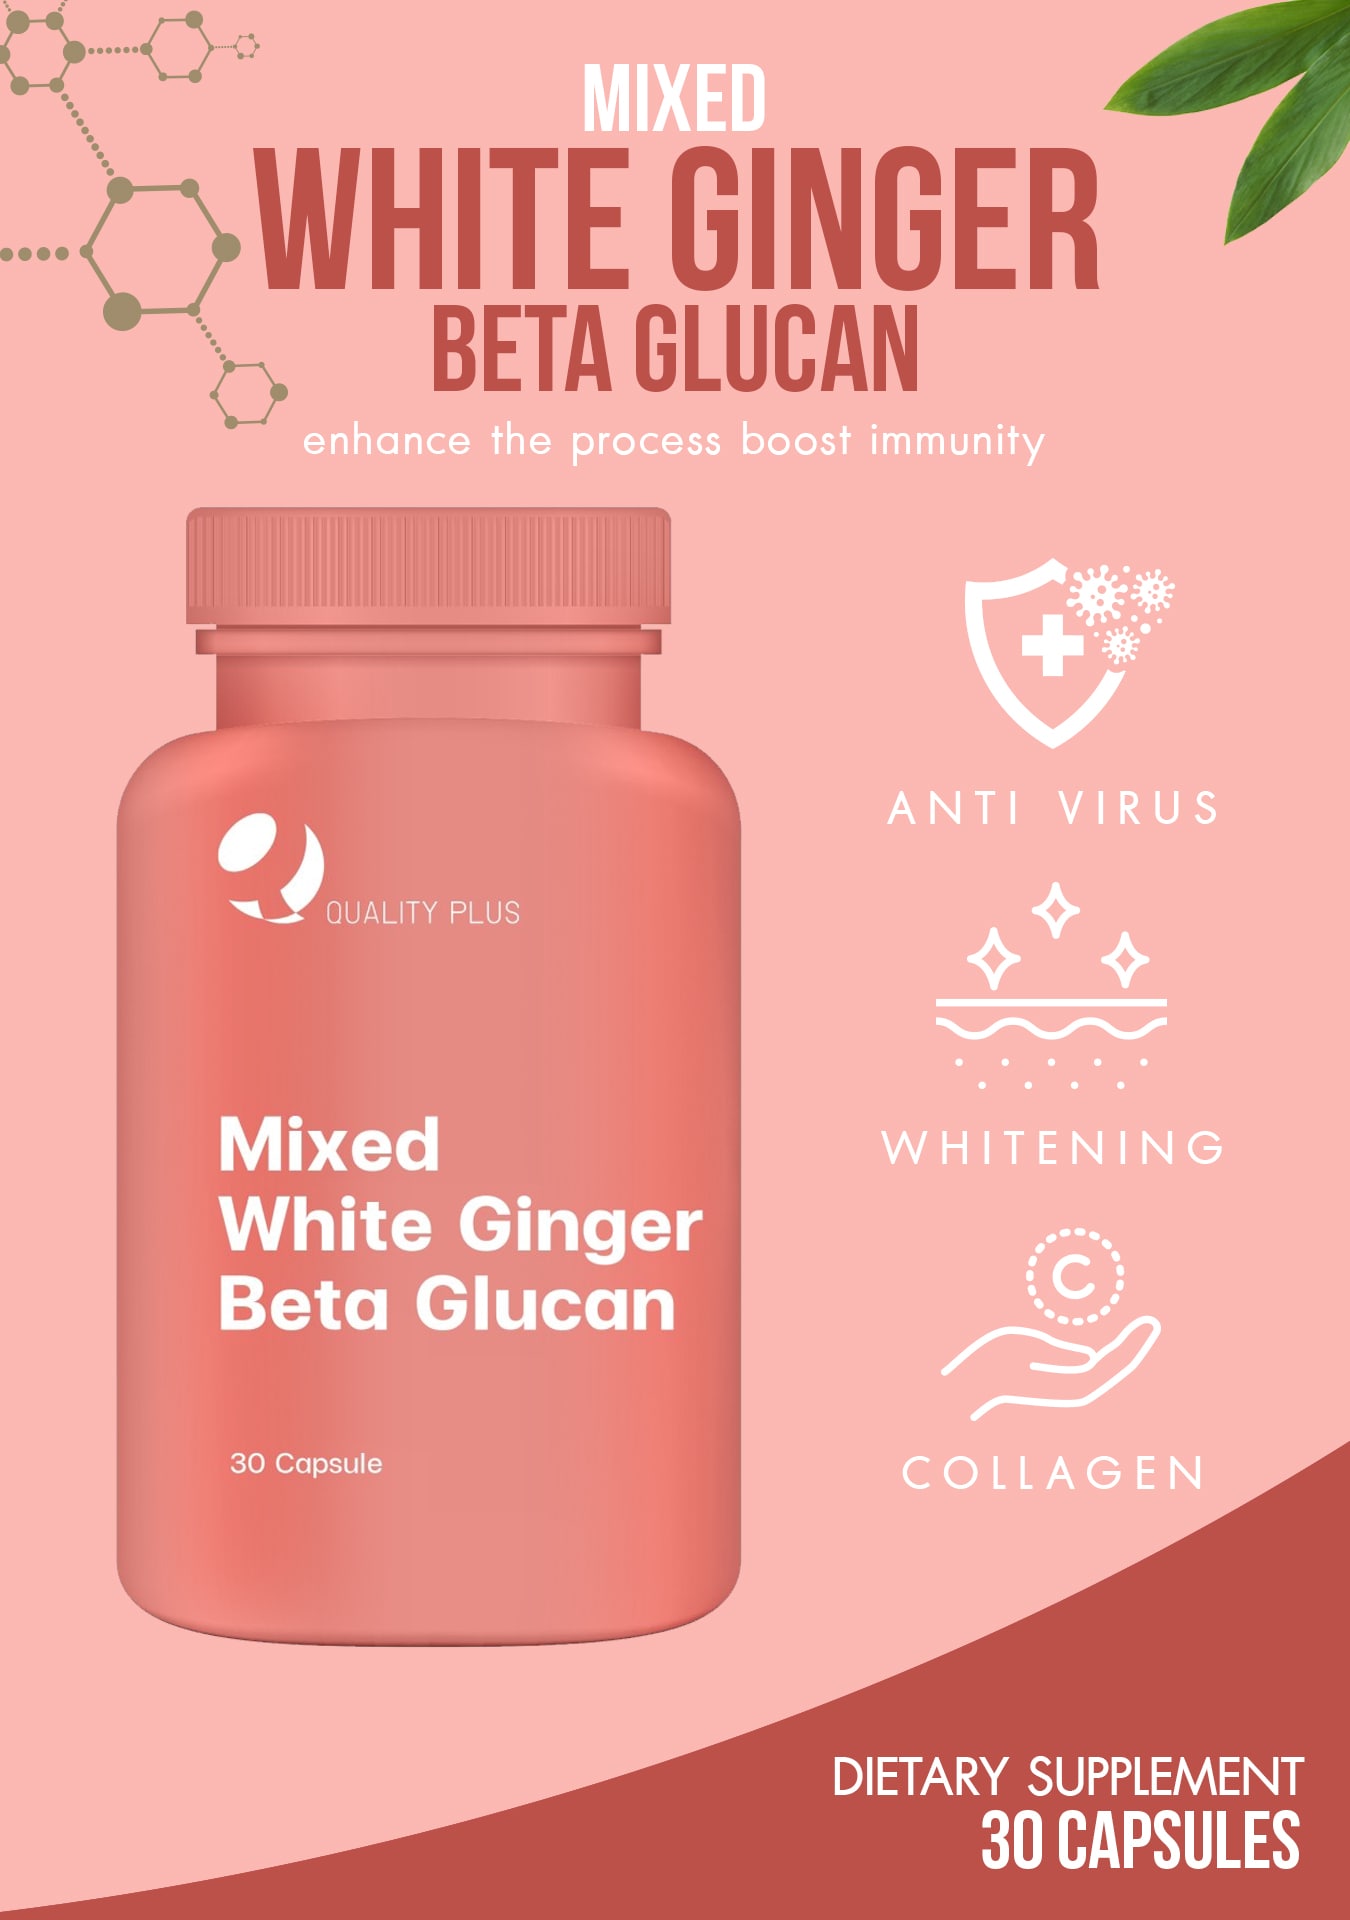 Mixed White Ginger Beta Glucan